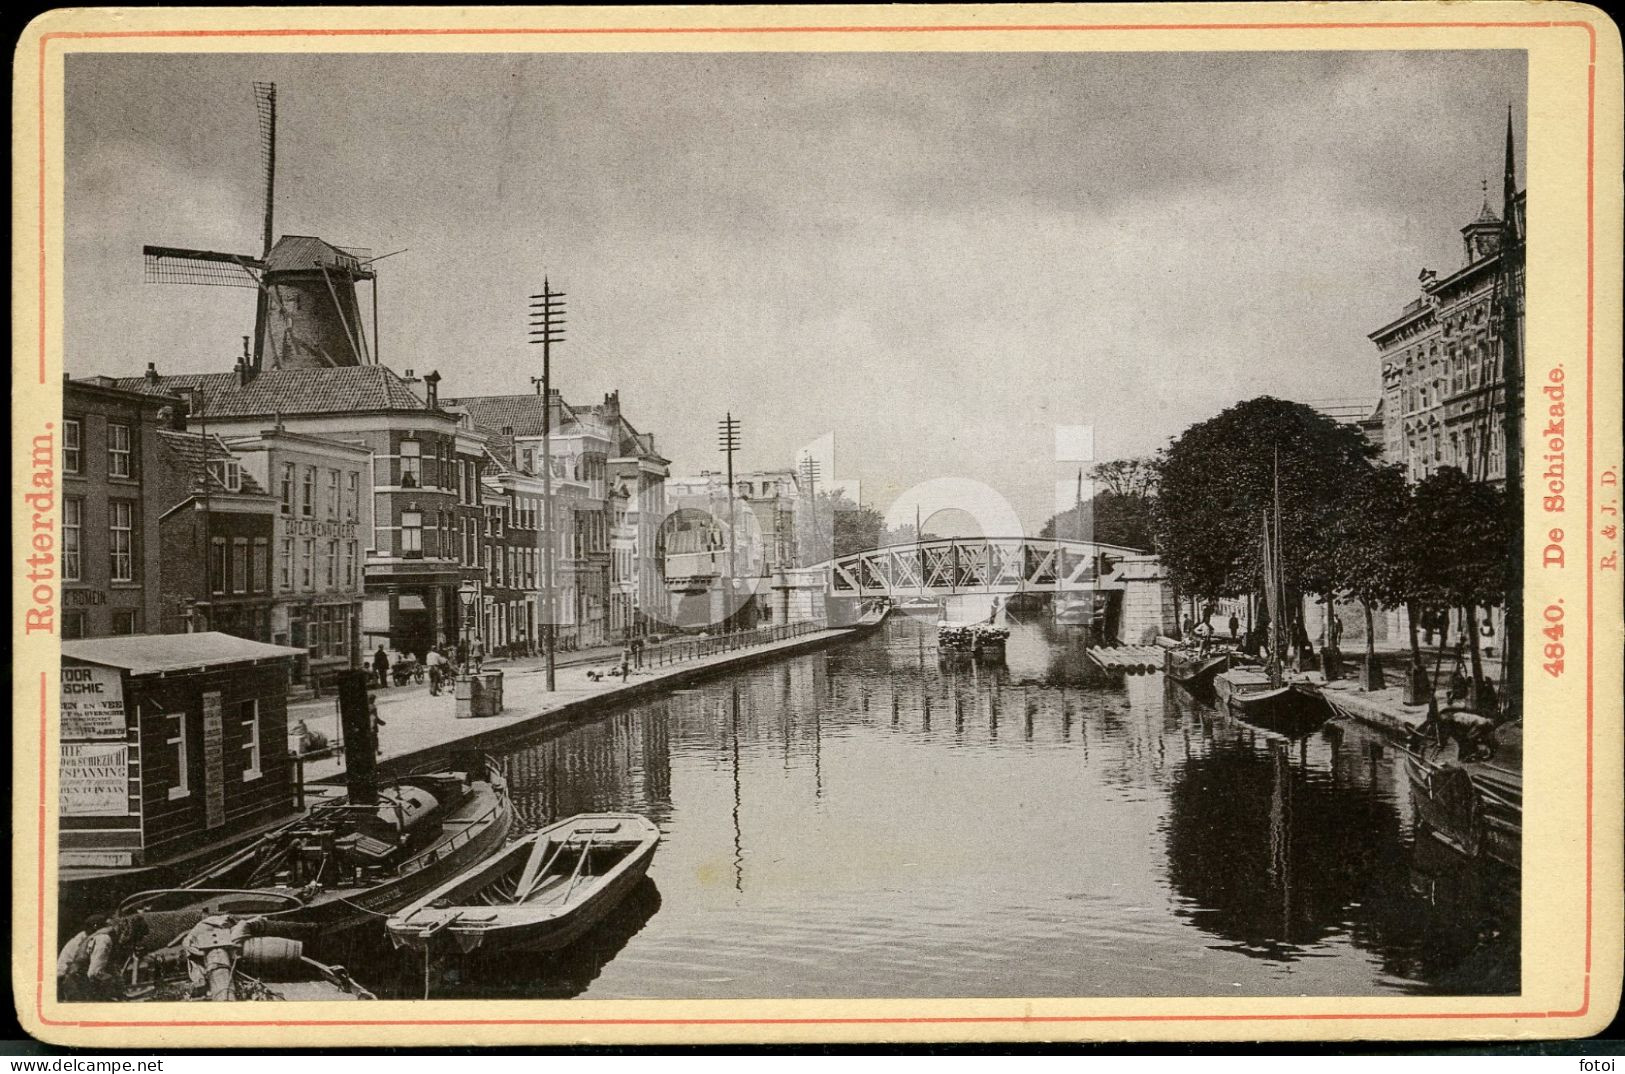 OLD CARD PHOTO FOTO HOTEL WIND MILL BRIDGE DE SCHIEKADE ROTTERDAM NETHERLANDS HOLLAND - Old (before 1900)